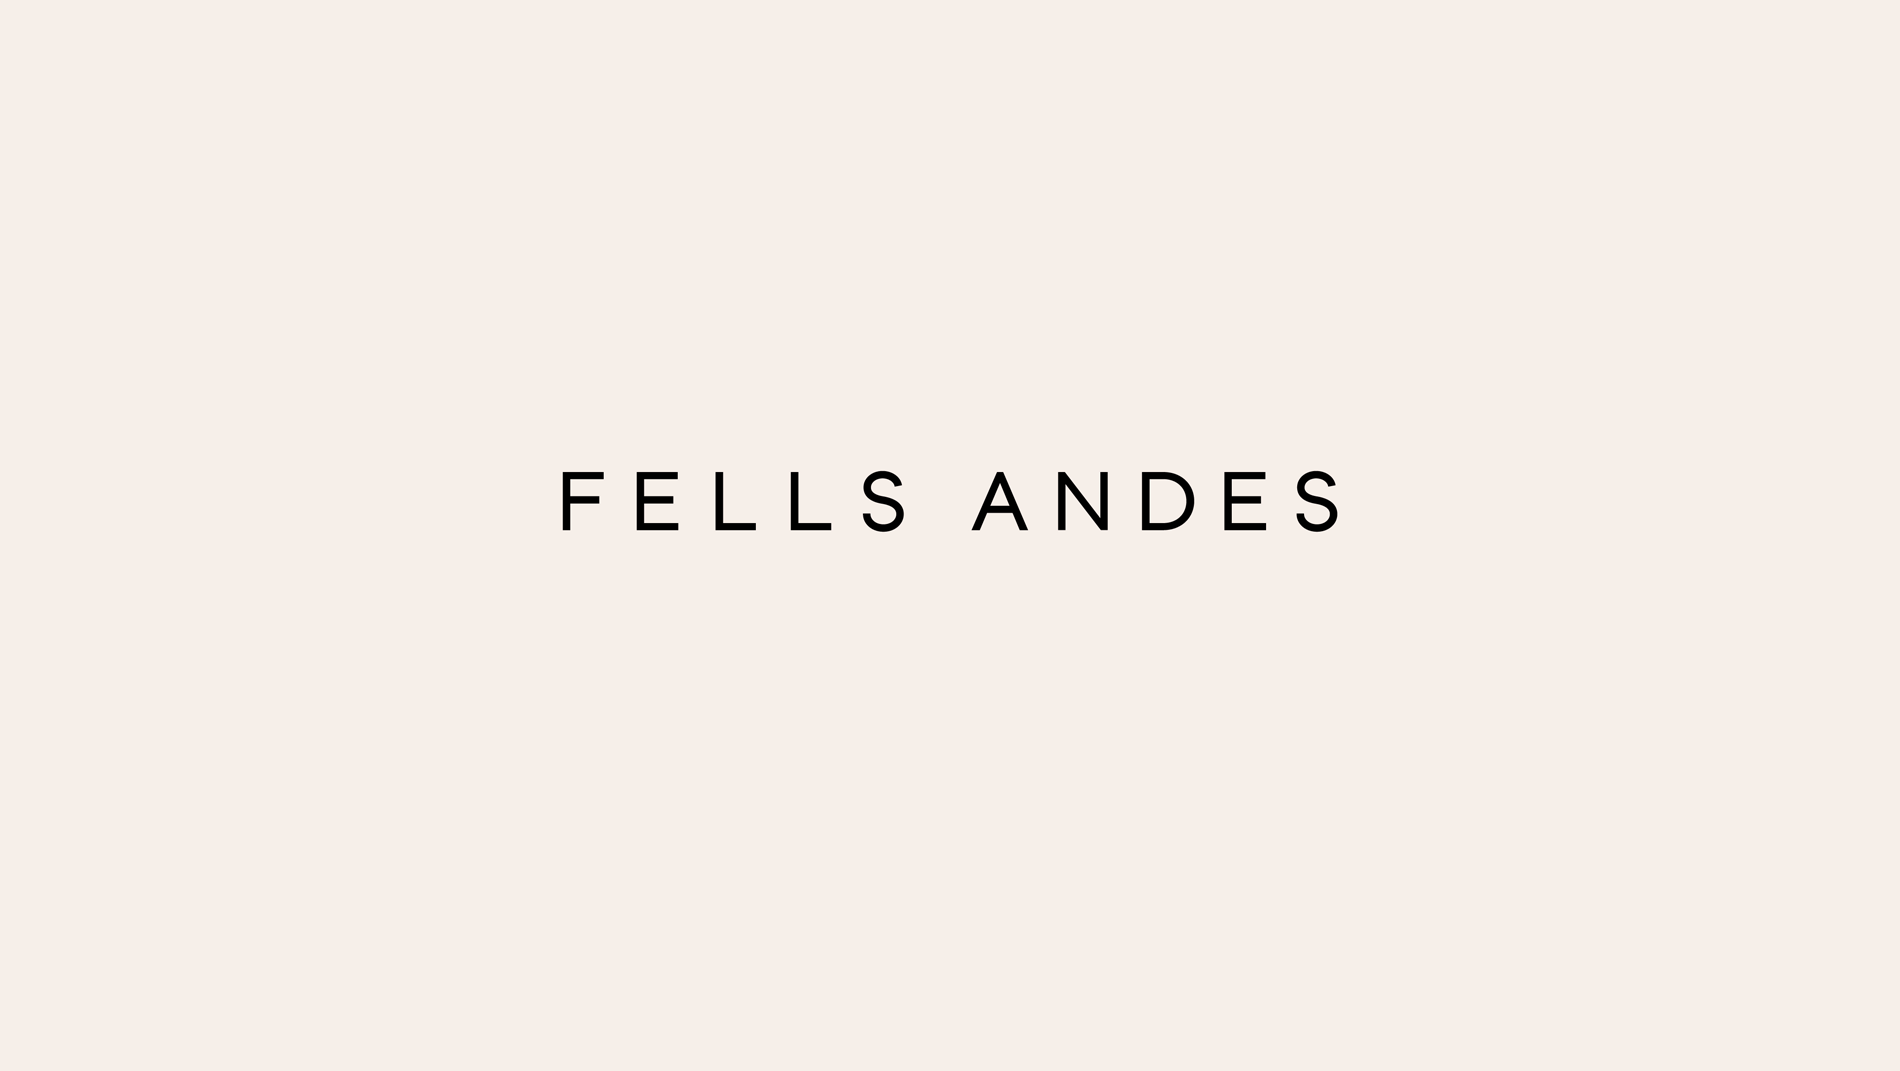 James_Trump_Fells_Andes_branding_3-13